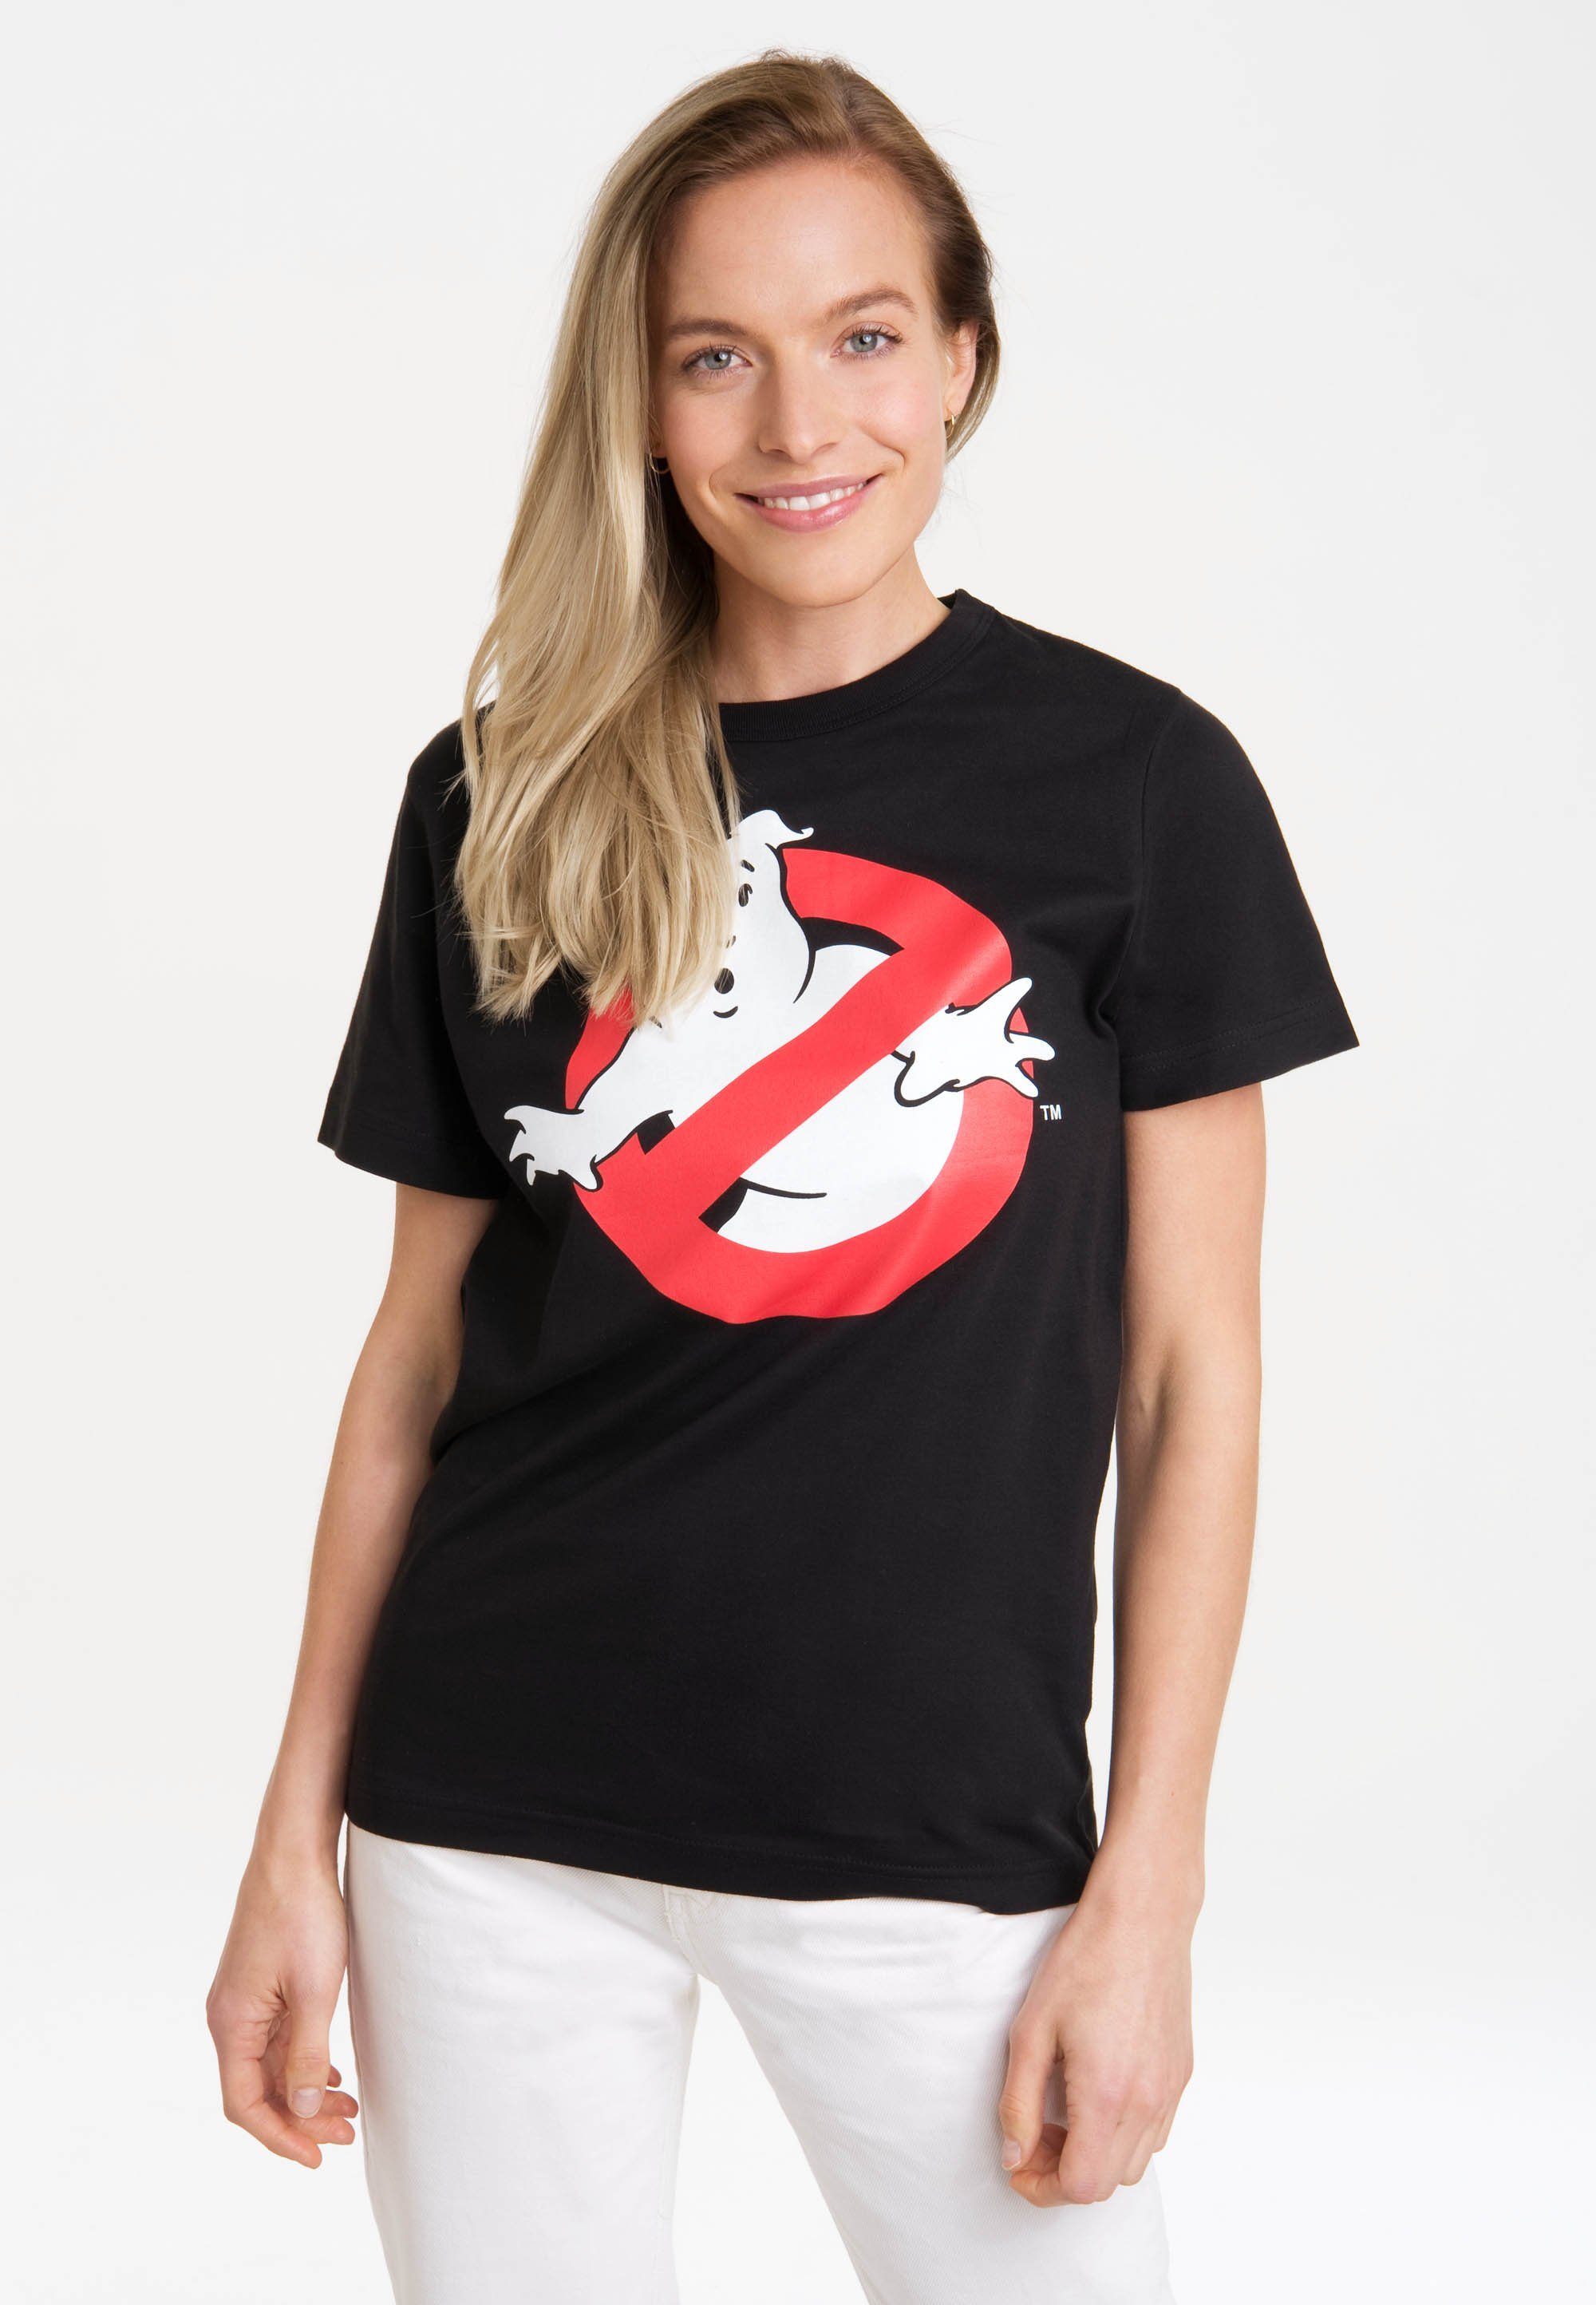 LOGOSHIRT T-Shirt Ghostbusters Logo mit lizenziertem Print